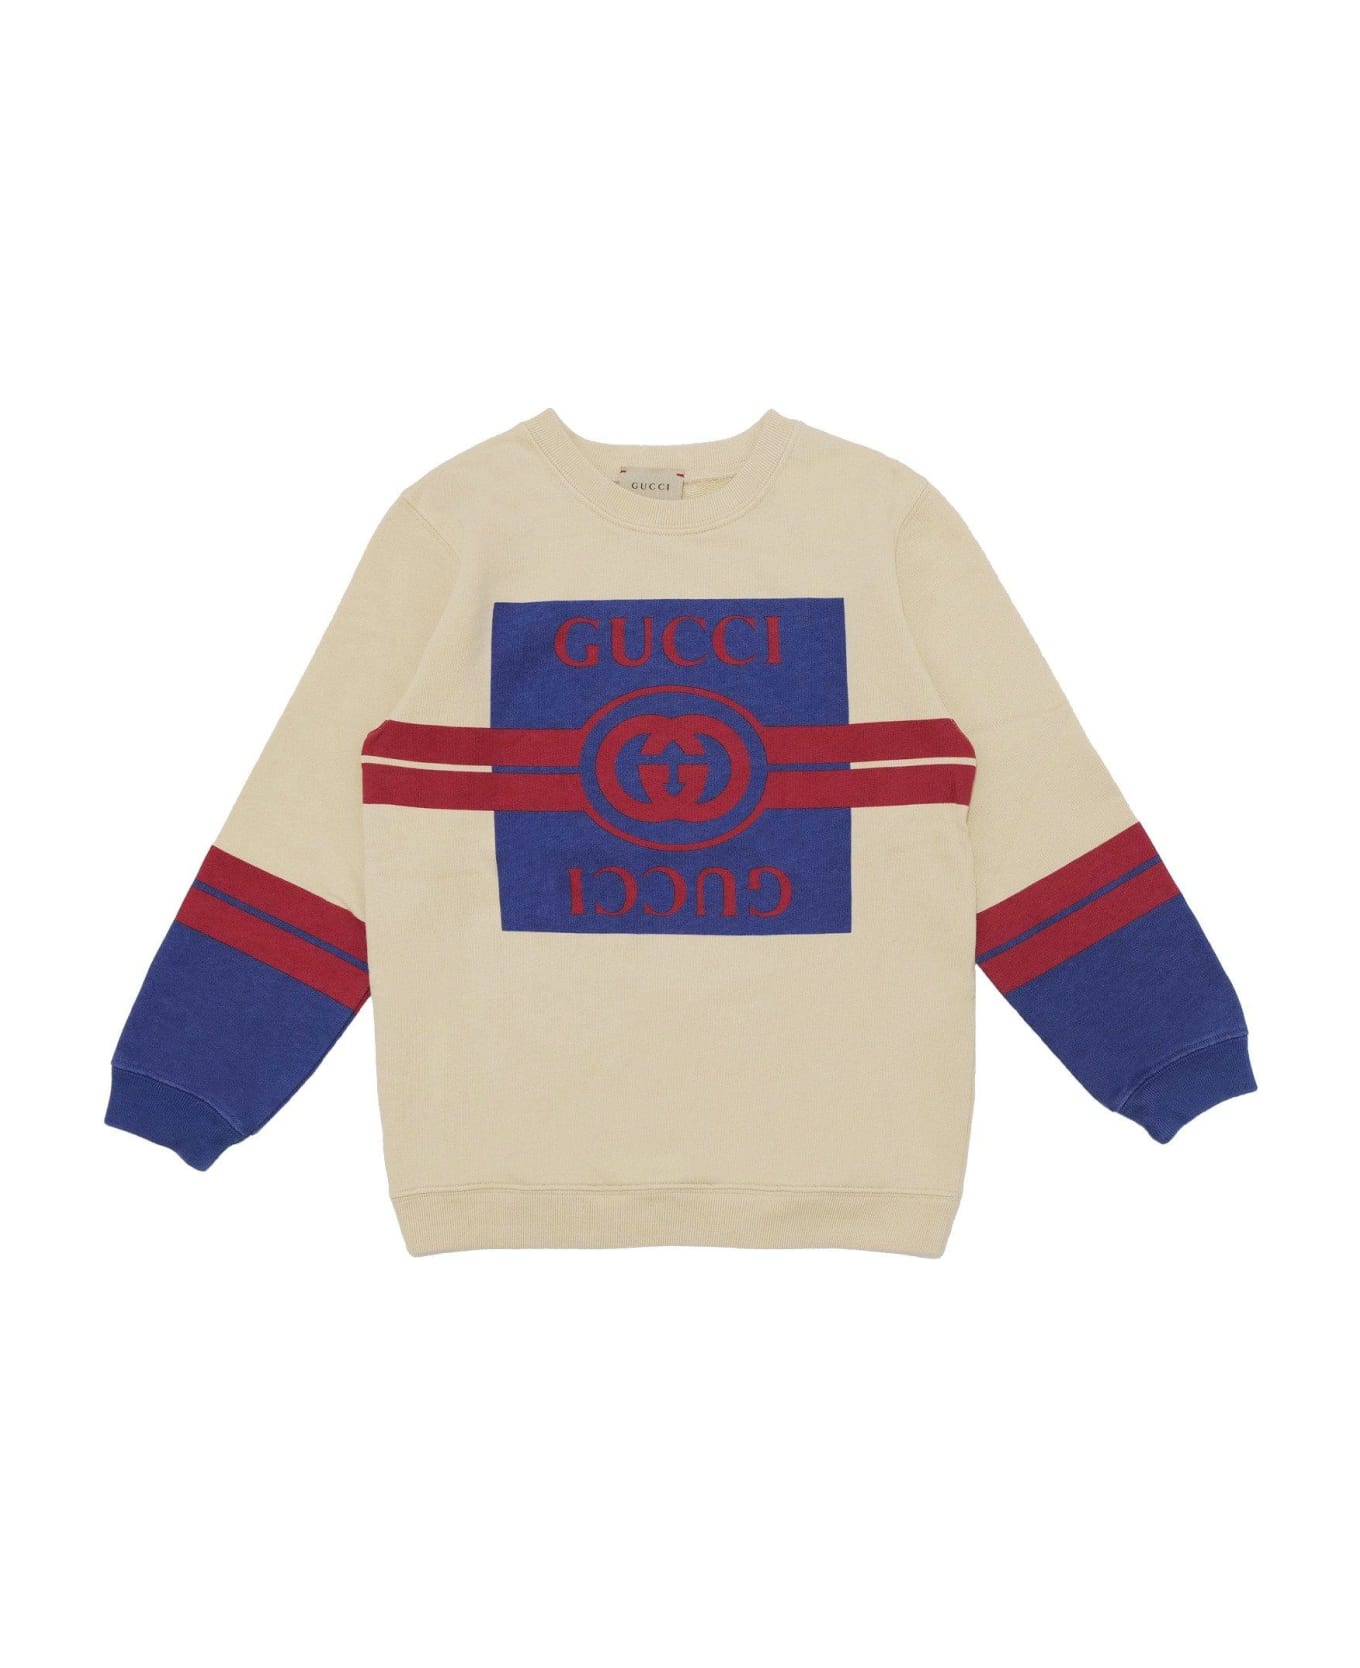 Gucci Logo Printed Crewneck Sweatshirt - BEIGE